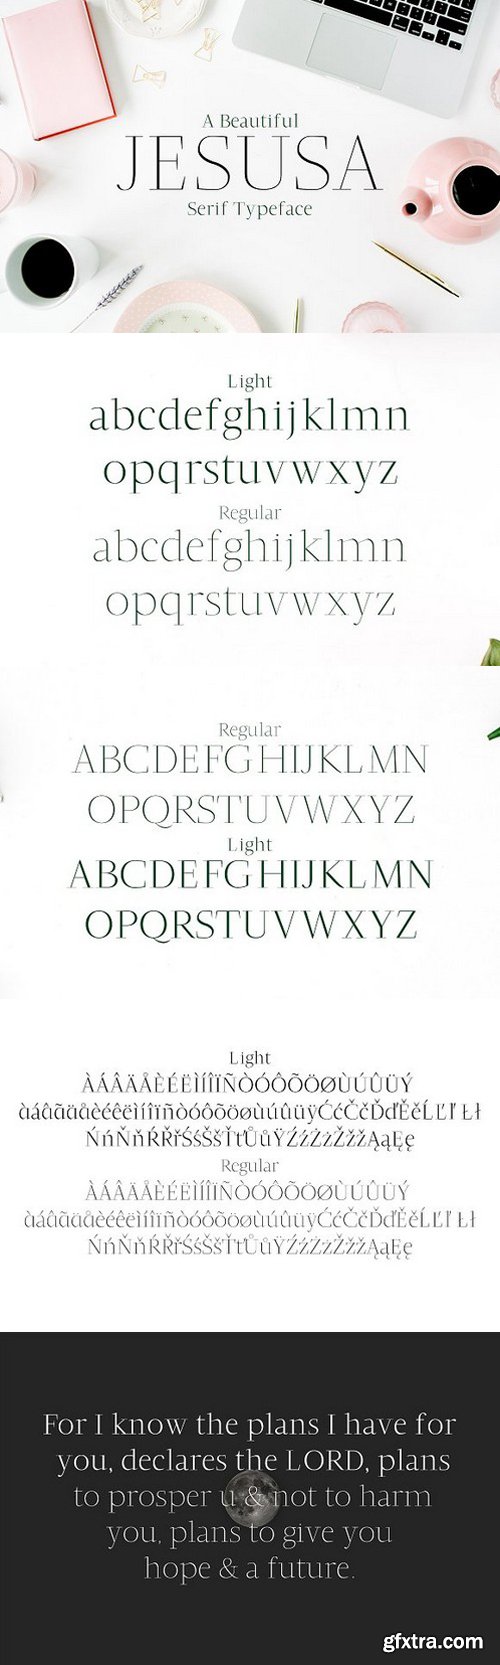 CM - Jesusa Serif Typeface 1782571